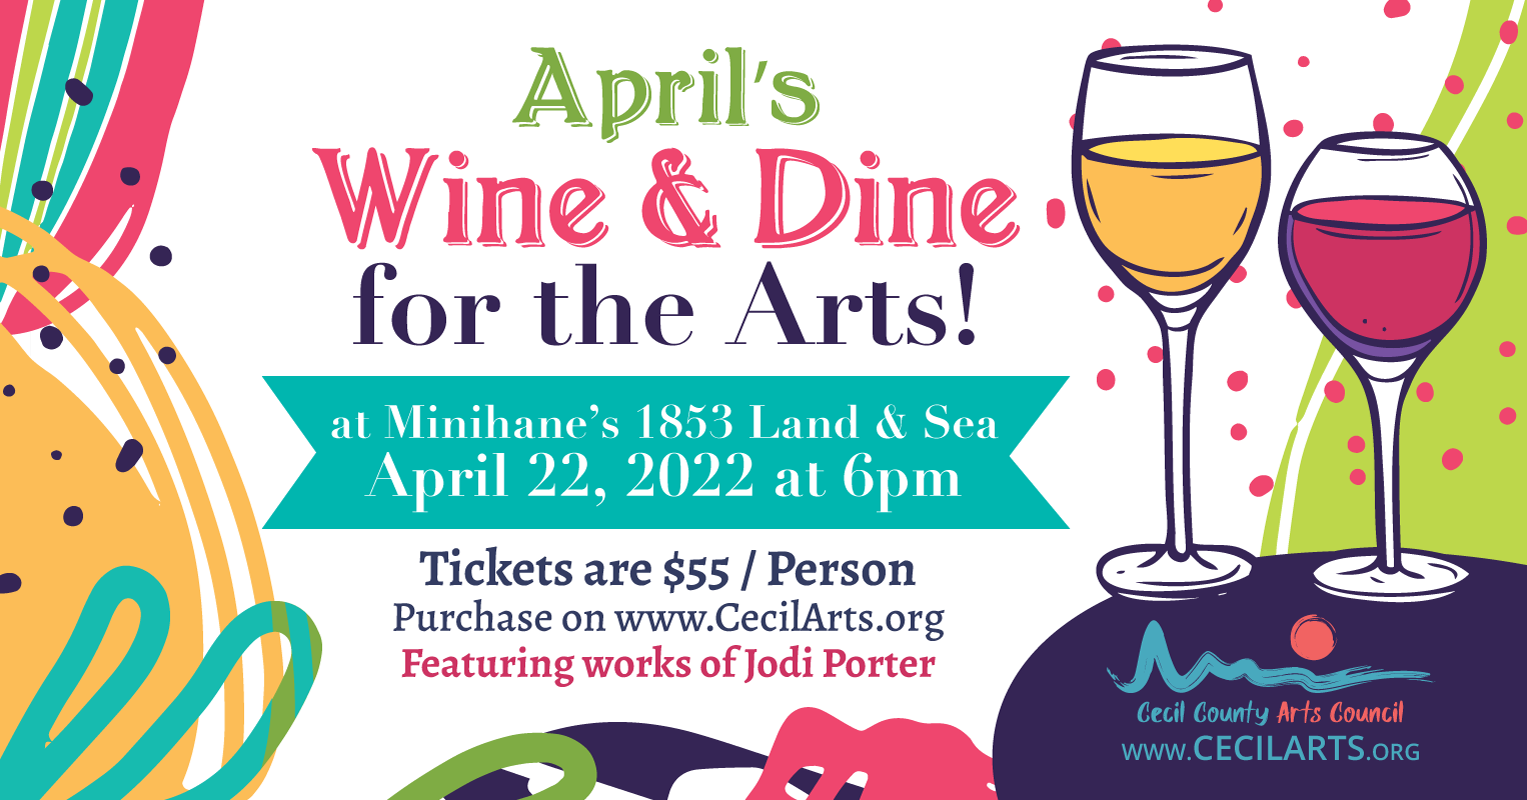 Wine & Dine for the Arts April - Cecil County Arts Council